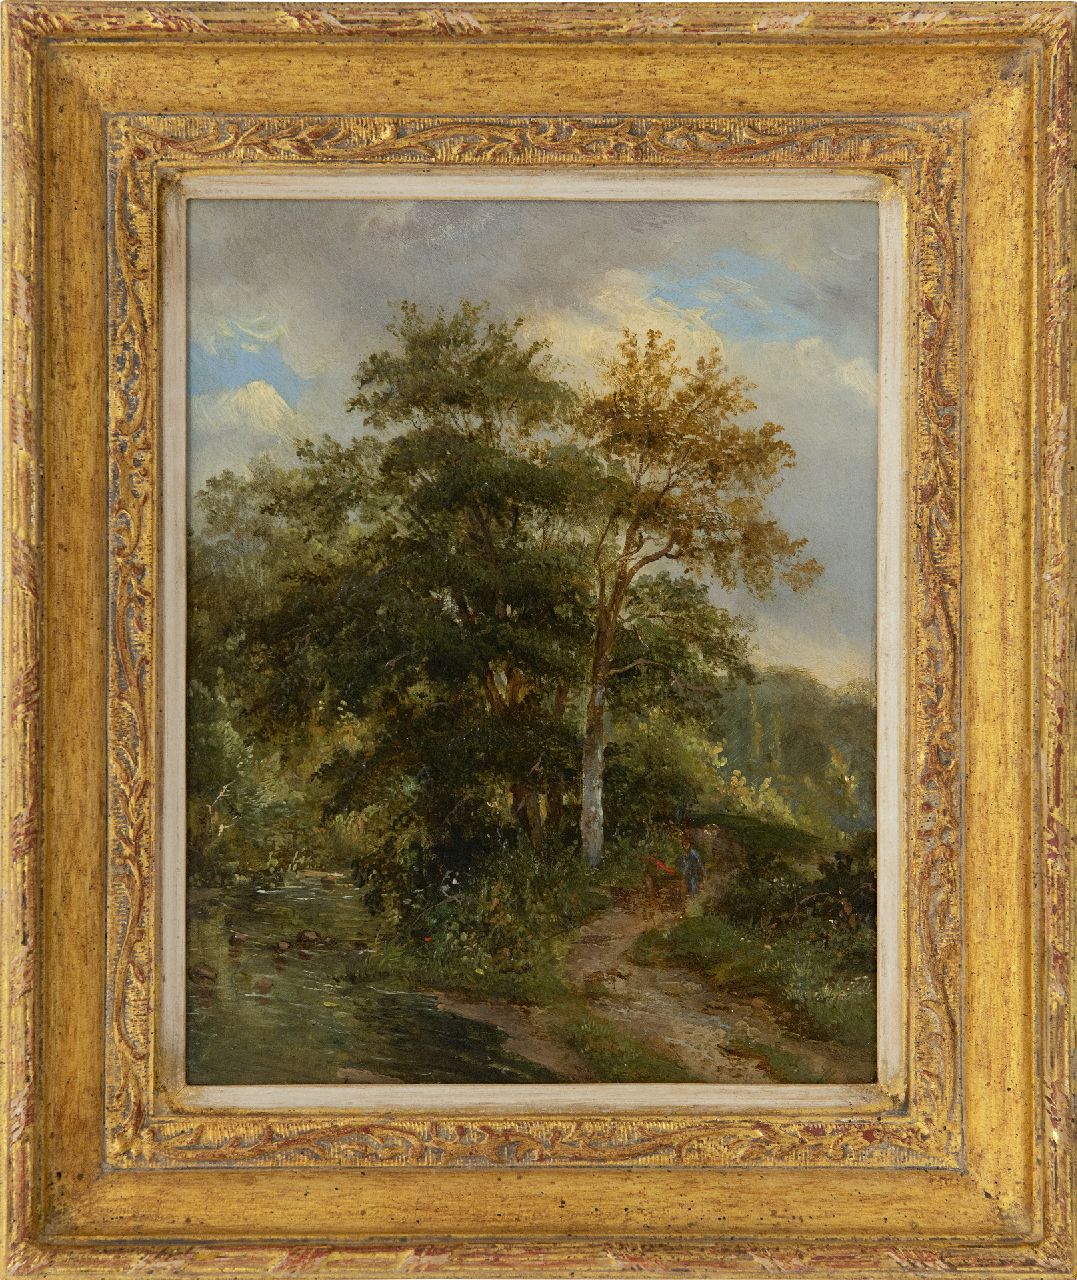 Christ P.C.  | Pieter Caspar Christ | Paintings offered for sale | The creek, oil on panel 23.7 x 18.9 cm